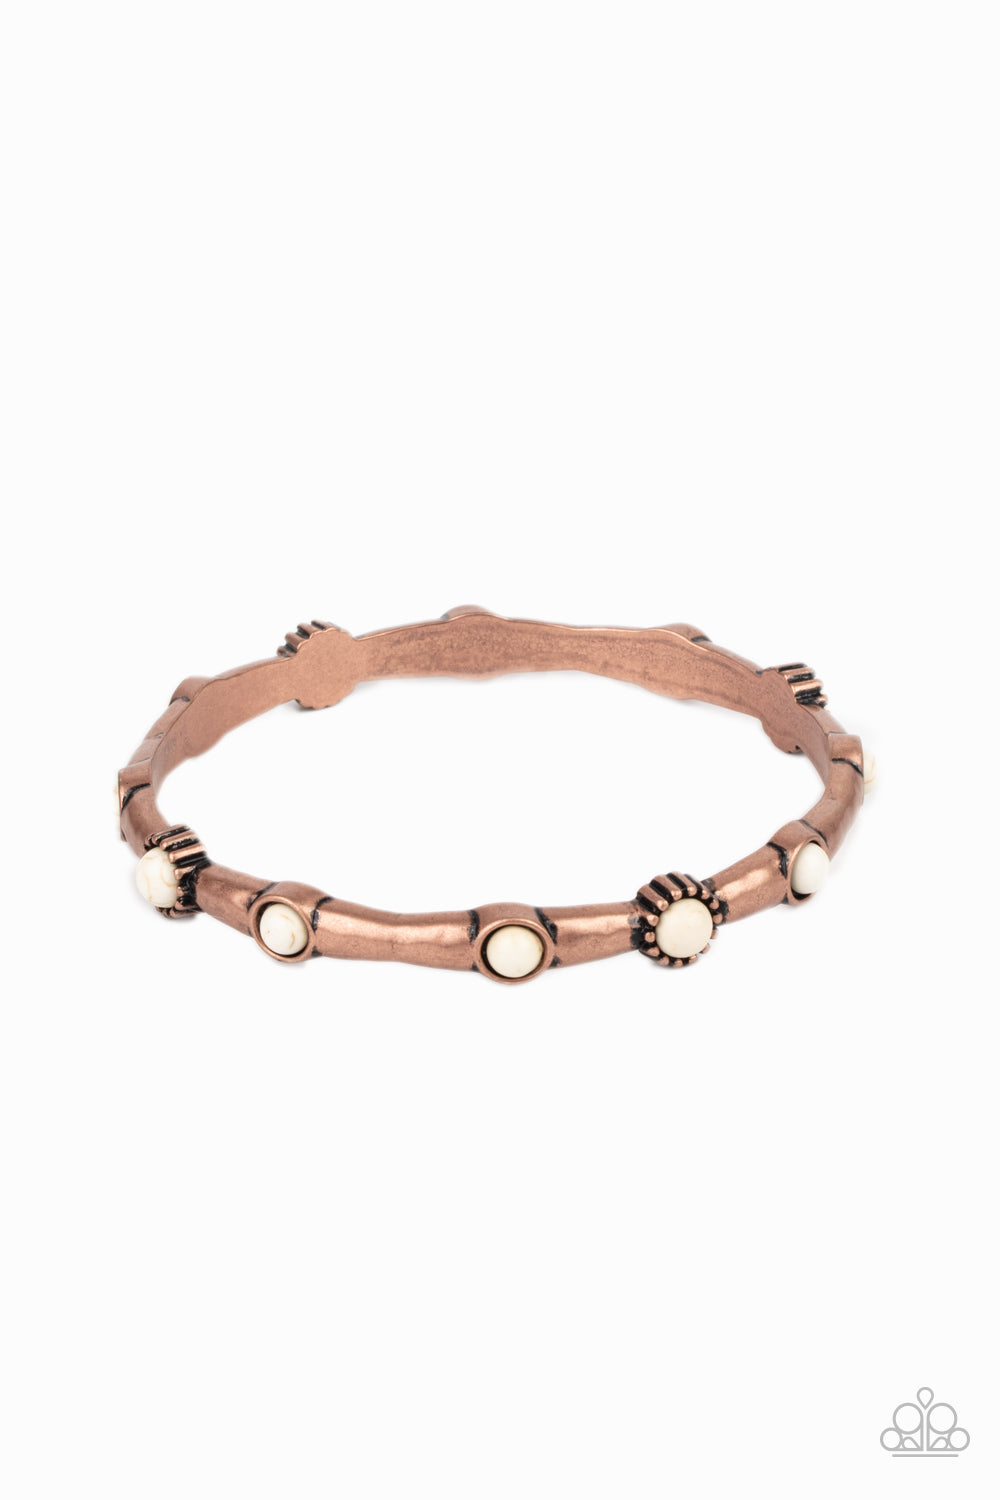 Paparazzi Rebel Sandstorm - Copper - Bracelet - $5 Jewelry with Ashley Swint